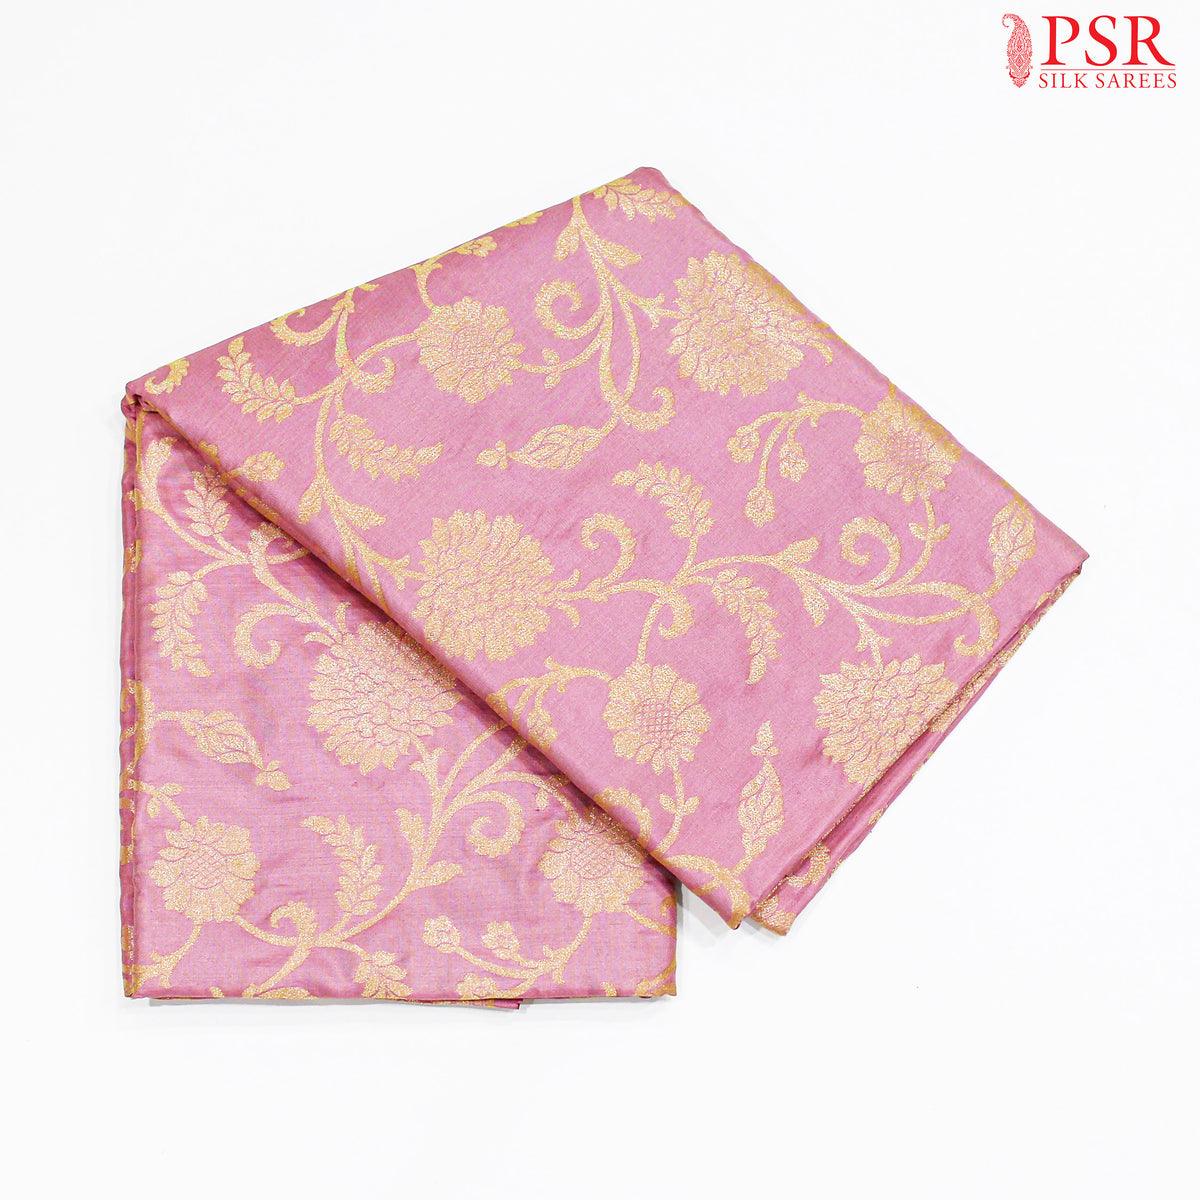 PSR Silks Presents Pastel Taffy Pink Colored Banaras Silk Saree With Beautiful Neem Zari Work. The Scroll Floral Brocade Pattern And Rich Zari Work In Pallu Gives This Saree An Adorable Look.